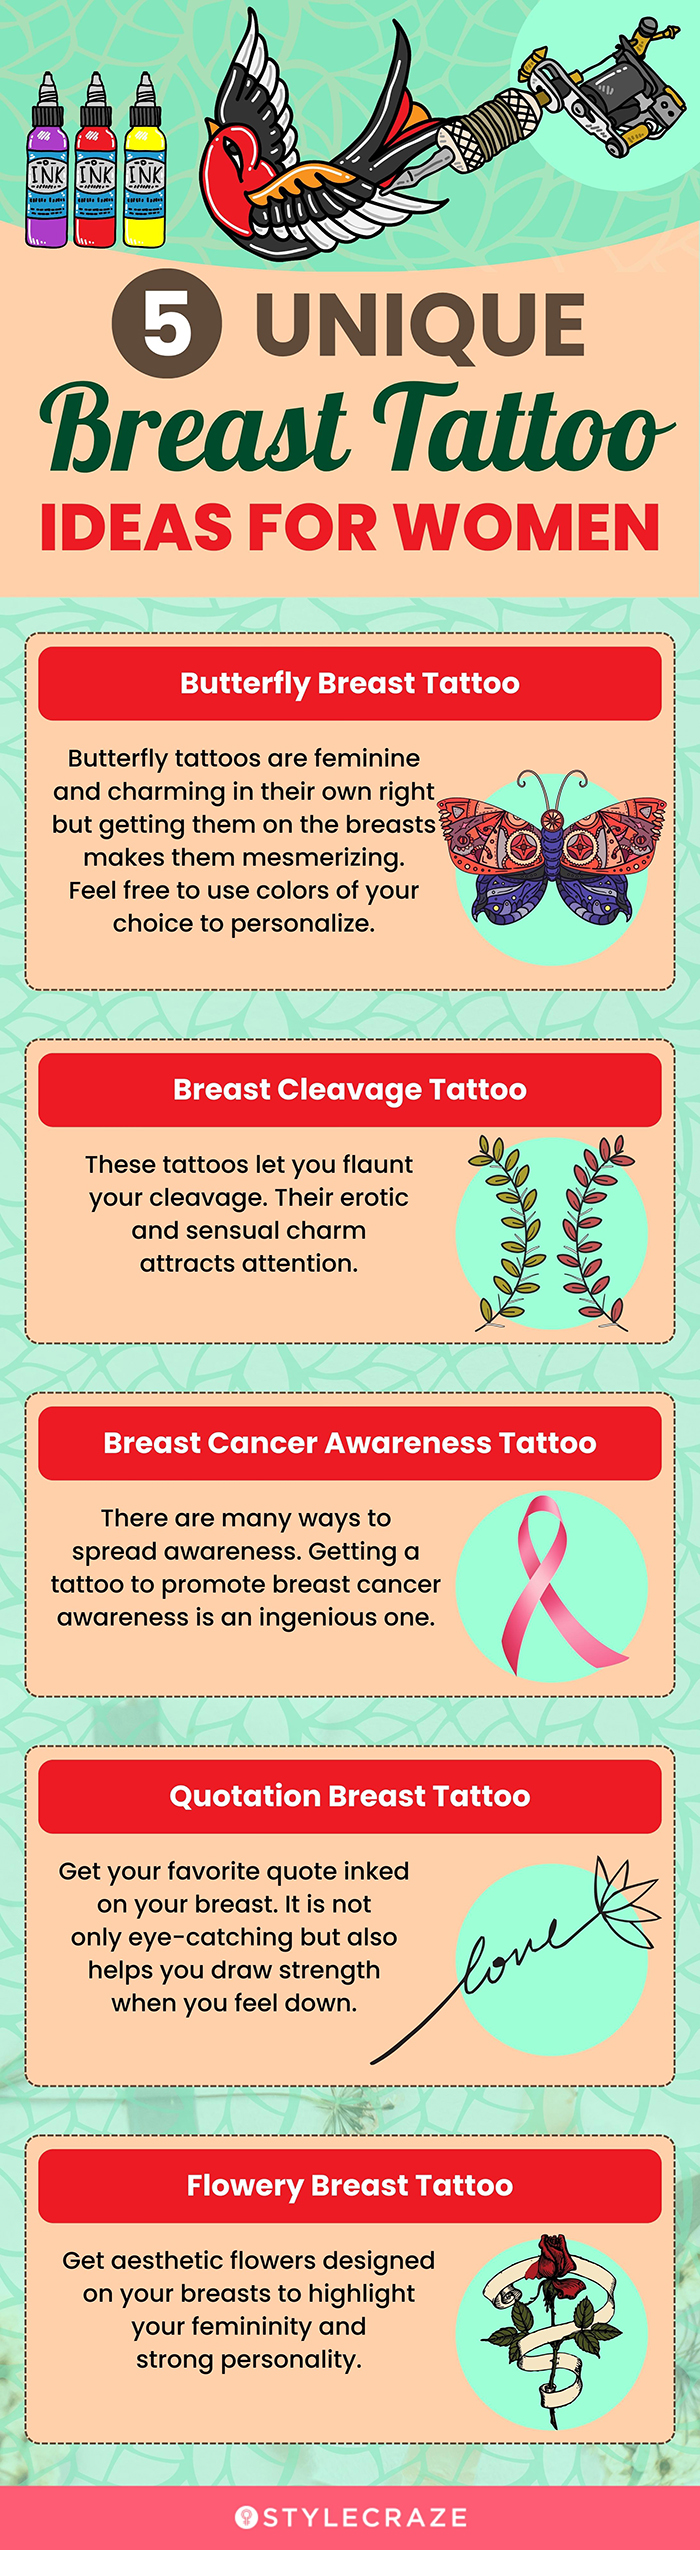 5 unique breast tattoo ideas for women (infographic)